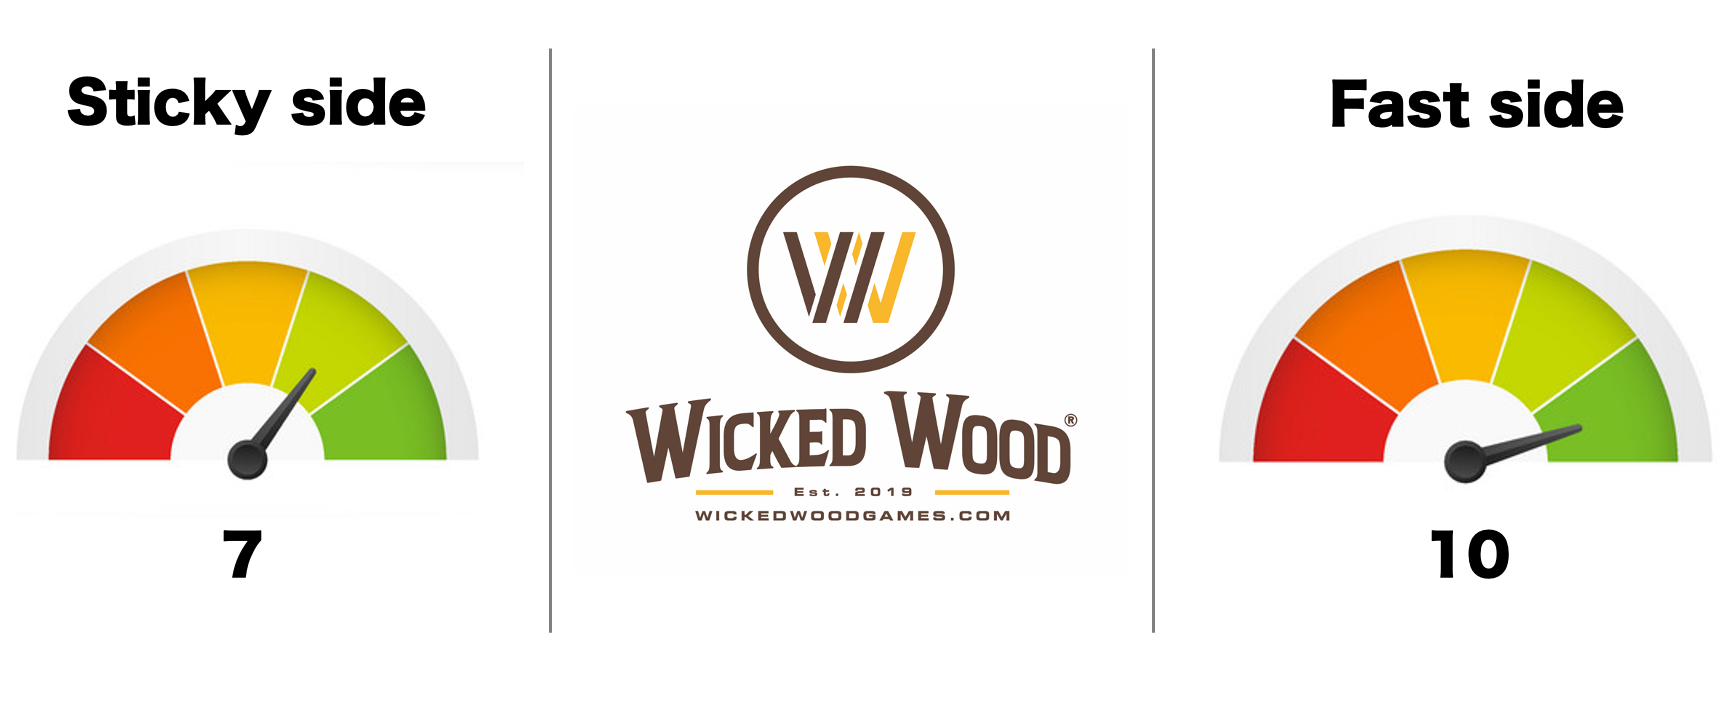 Sacs Pro Wicked Wood - GameChanger 1x4 sacs de Cornhole - Wicked Wood Games